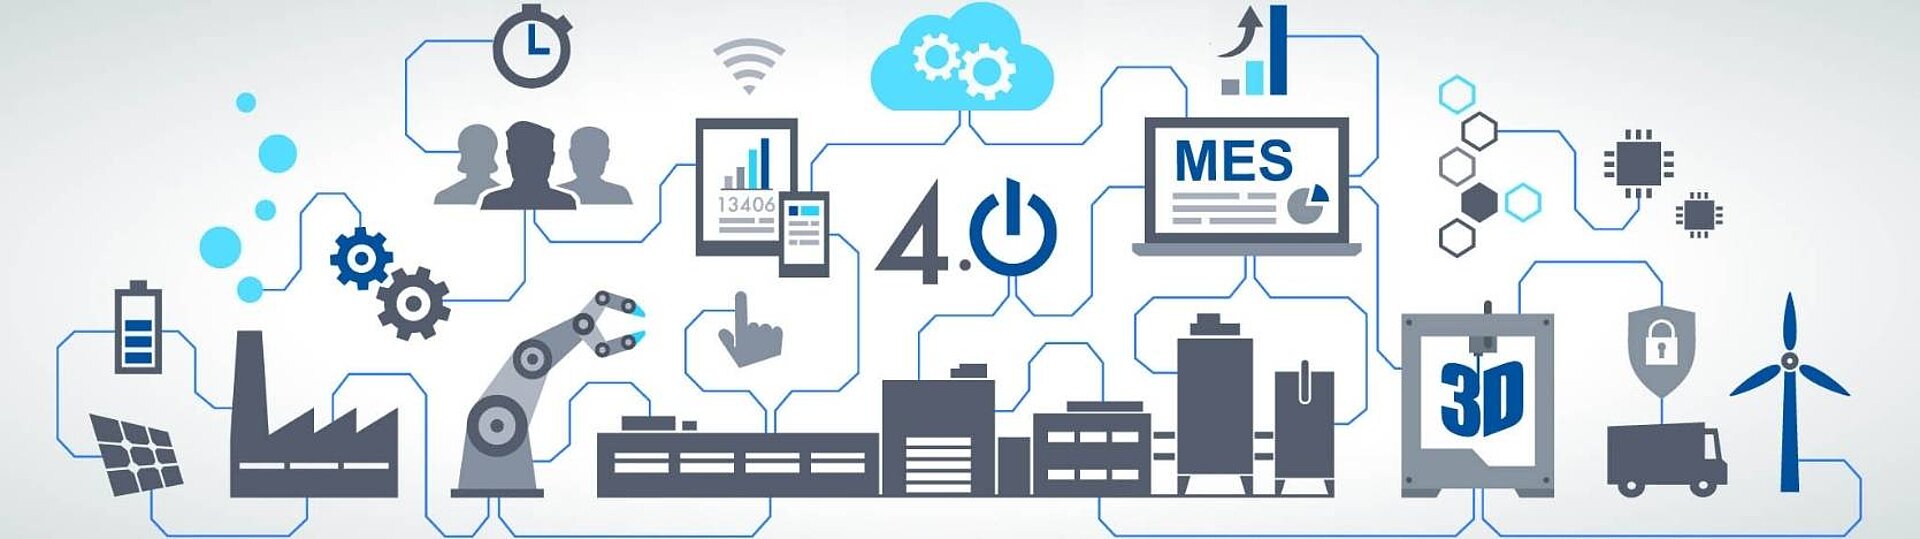 MPDV Innovation MES 4.0 Industrie 4.0